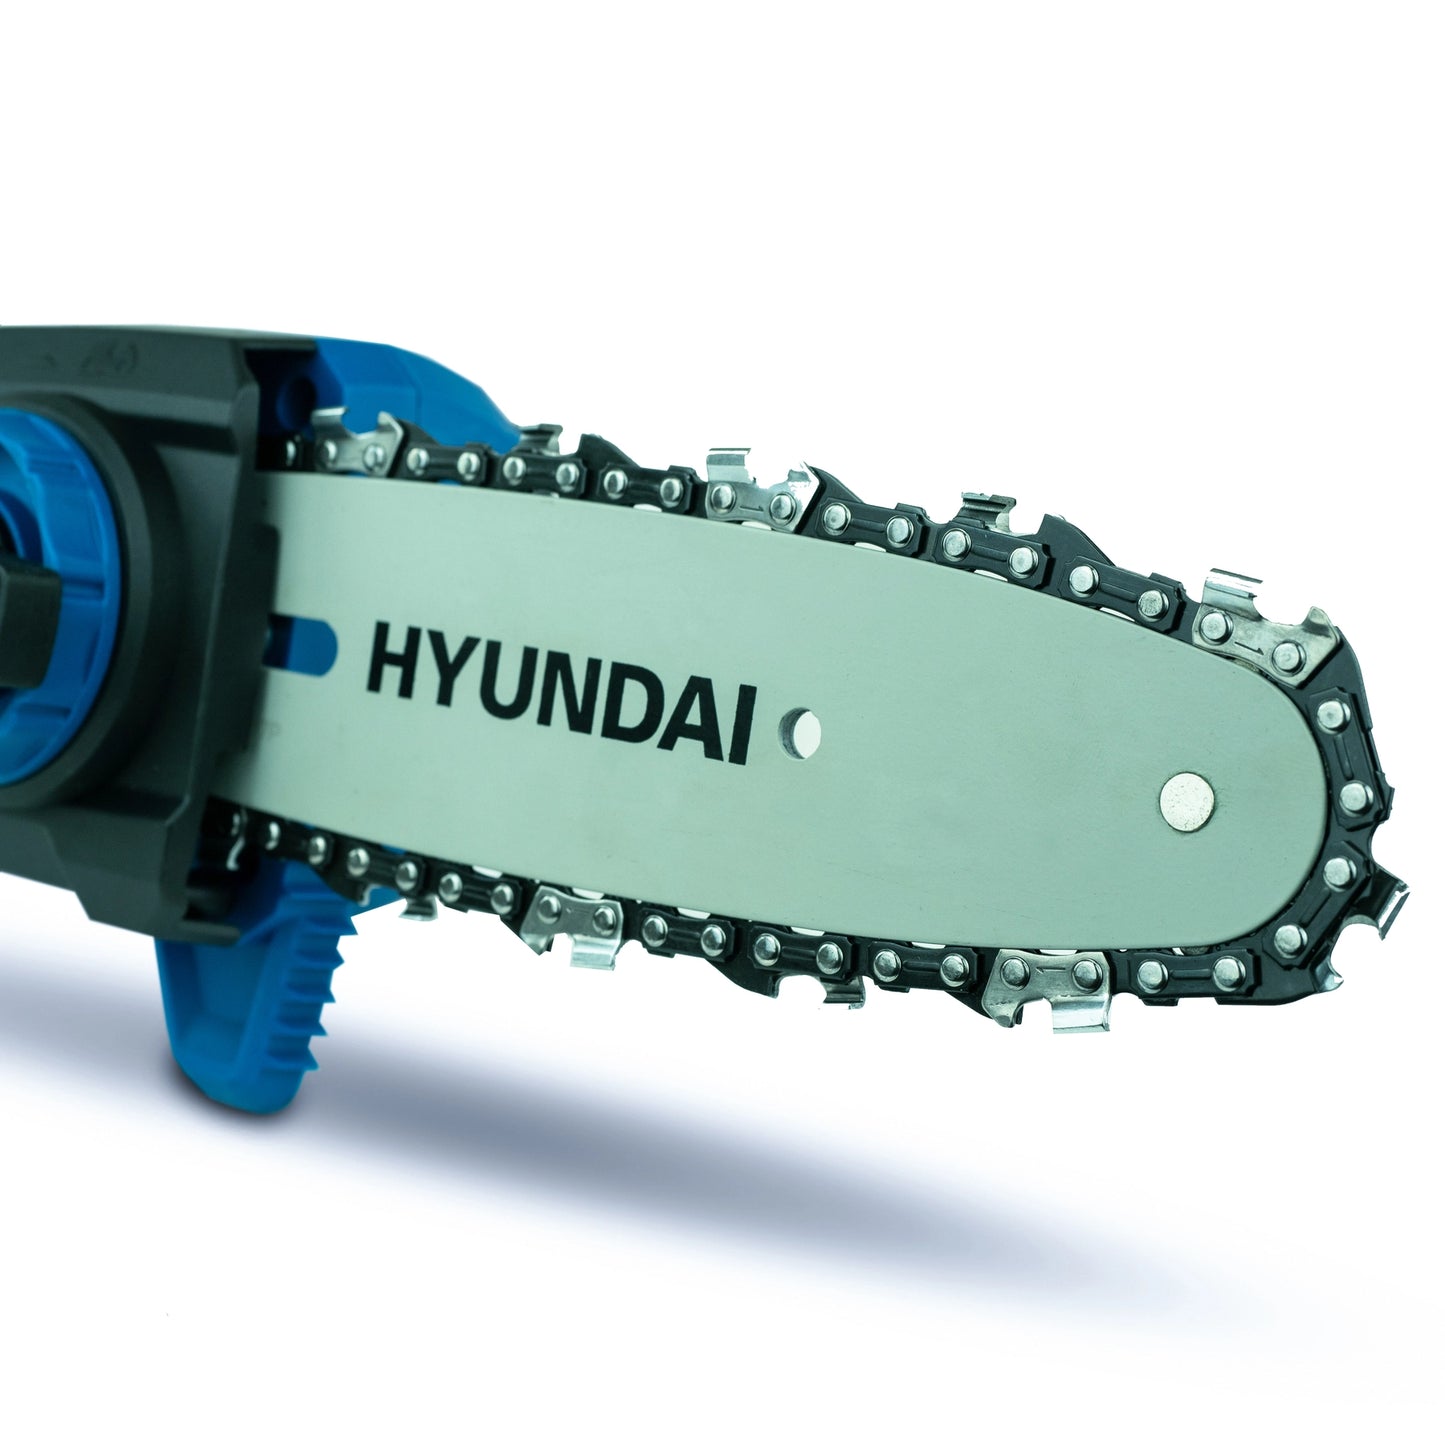 Hyundai HY2192 20V Cordless Pole Saw/Pruner